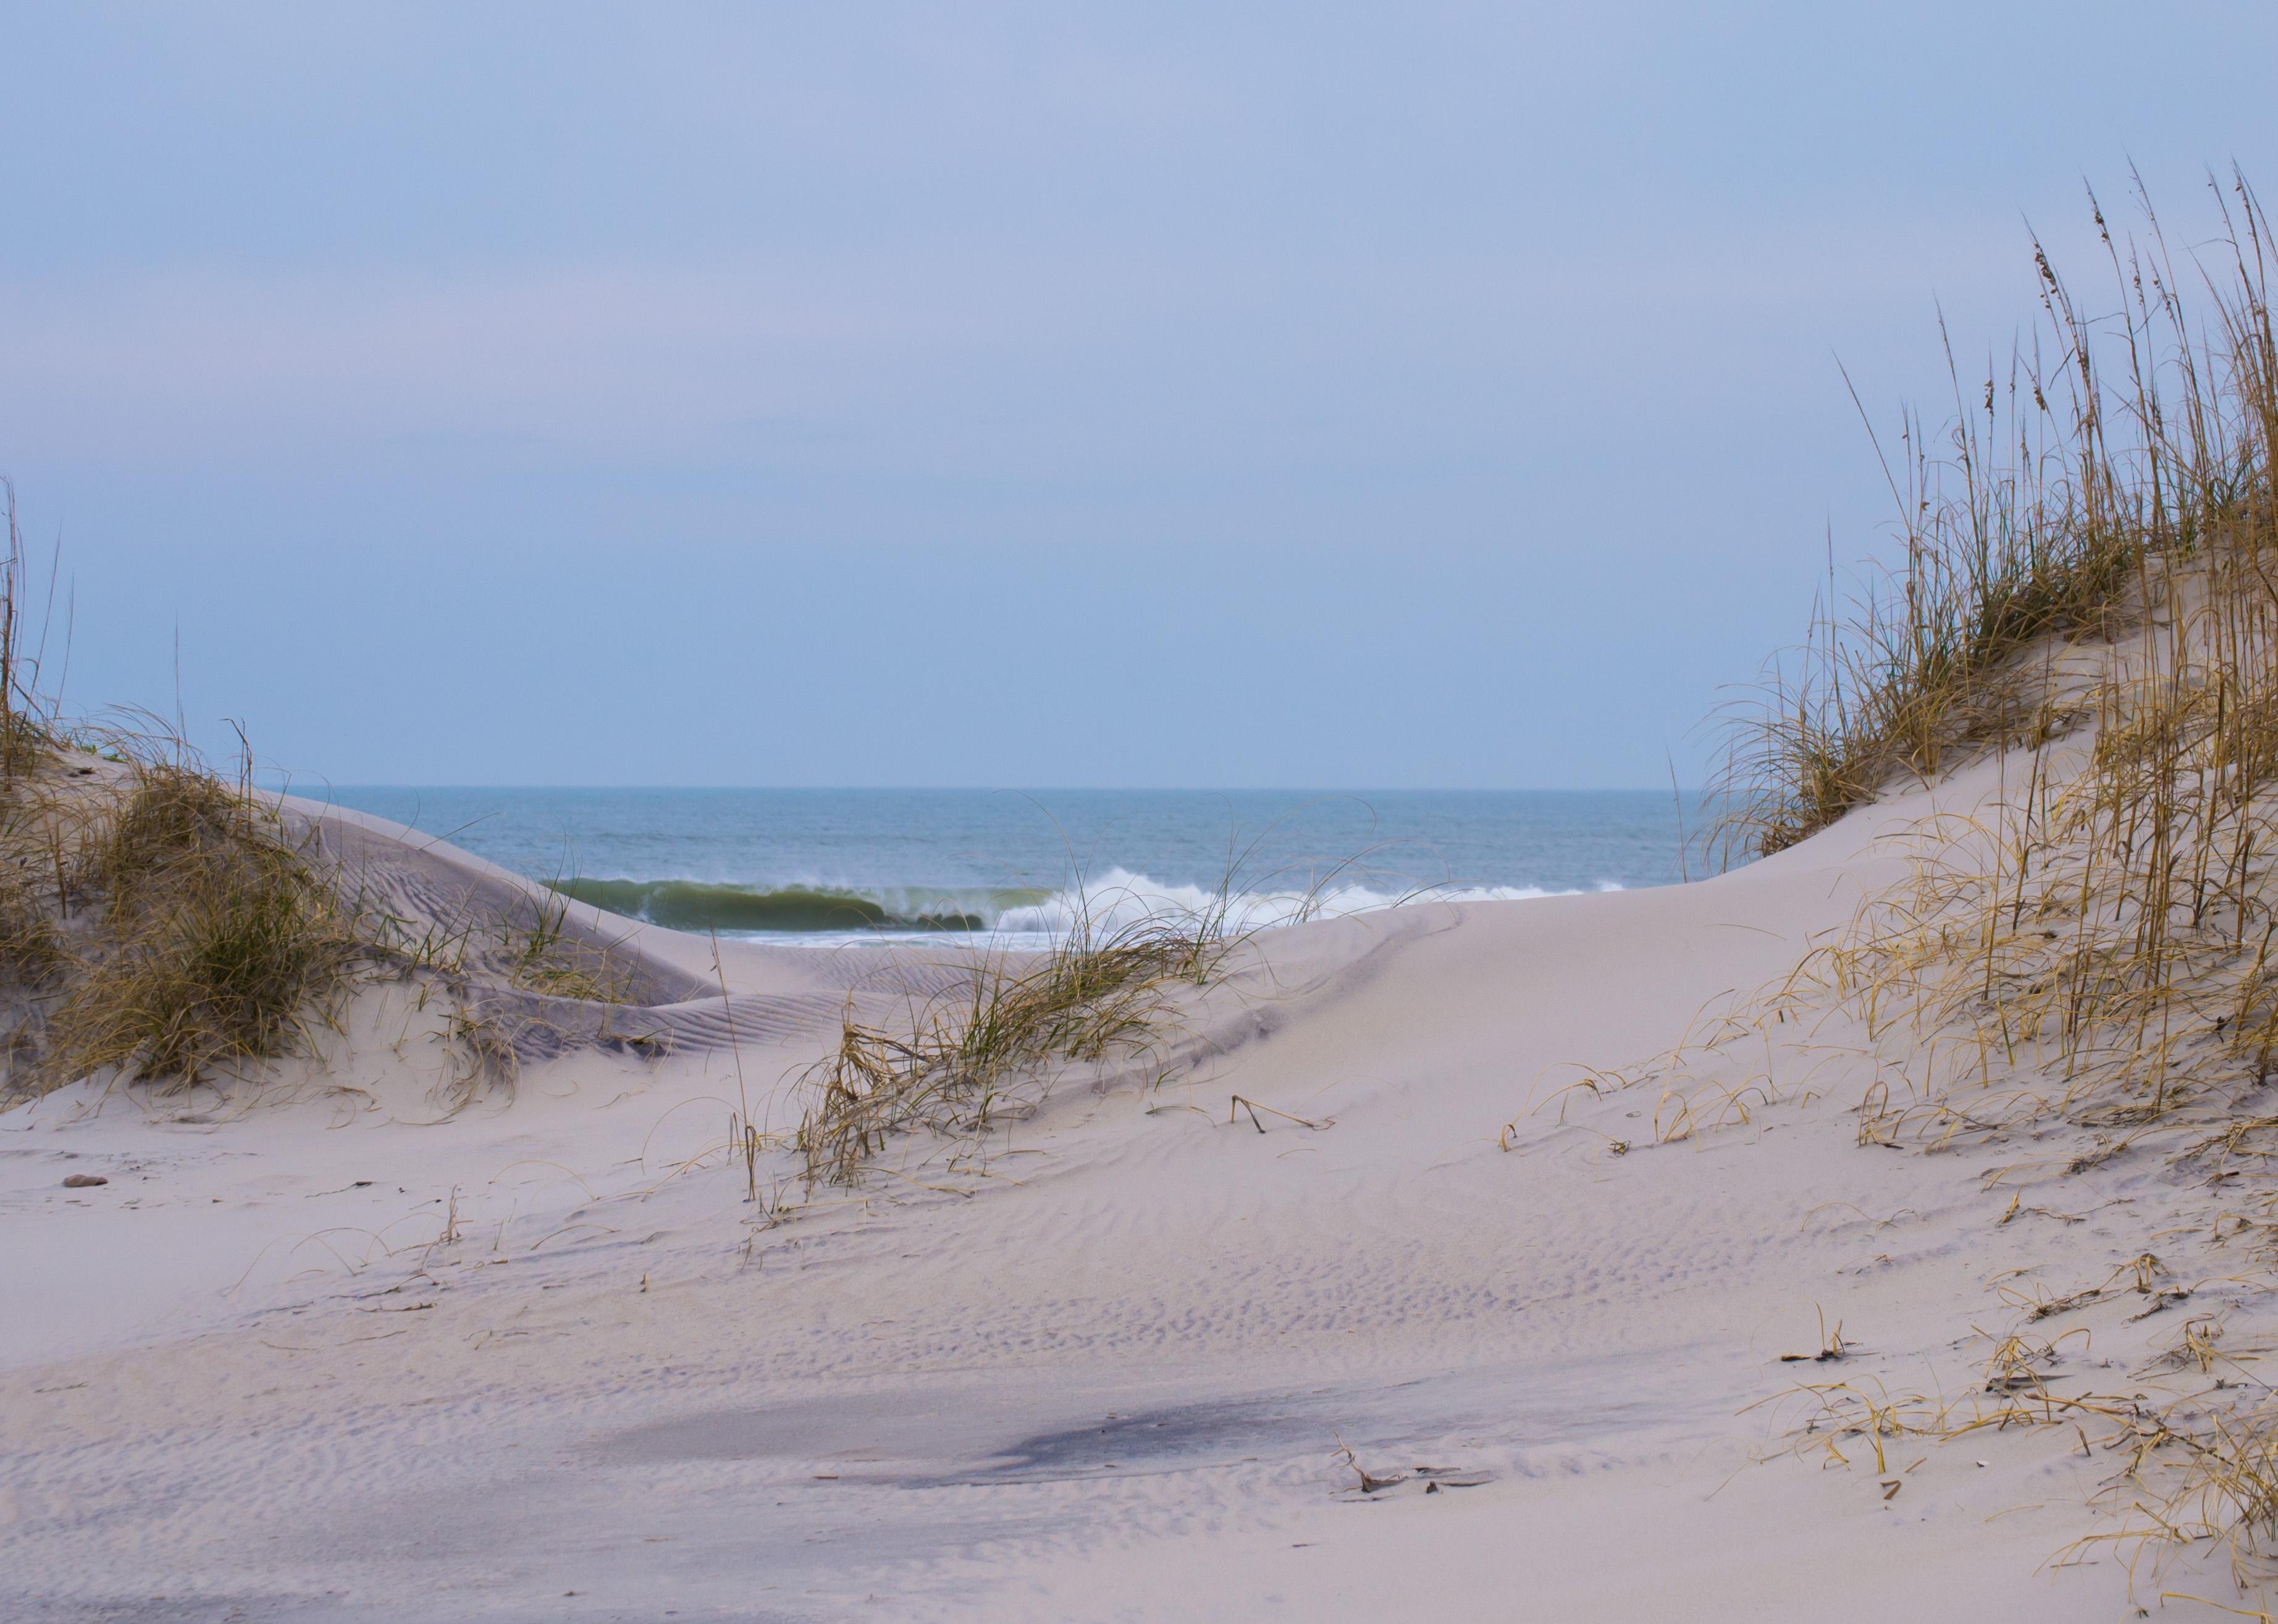 Sand dunes and water on horizon. 